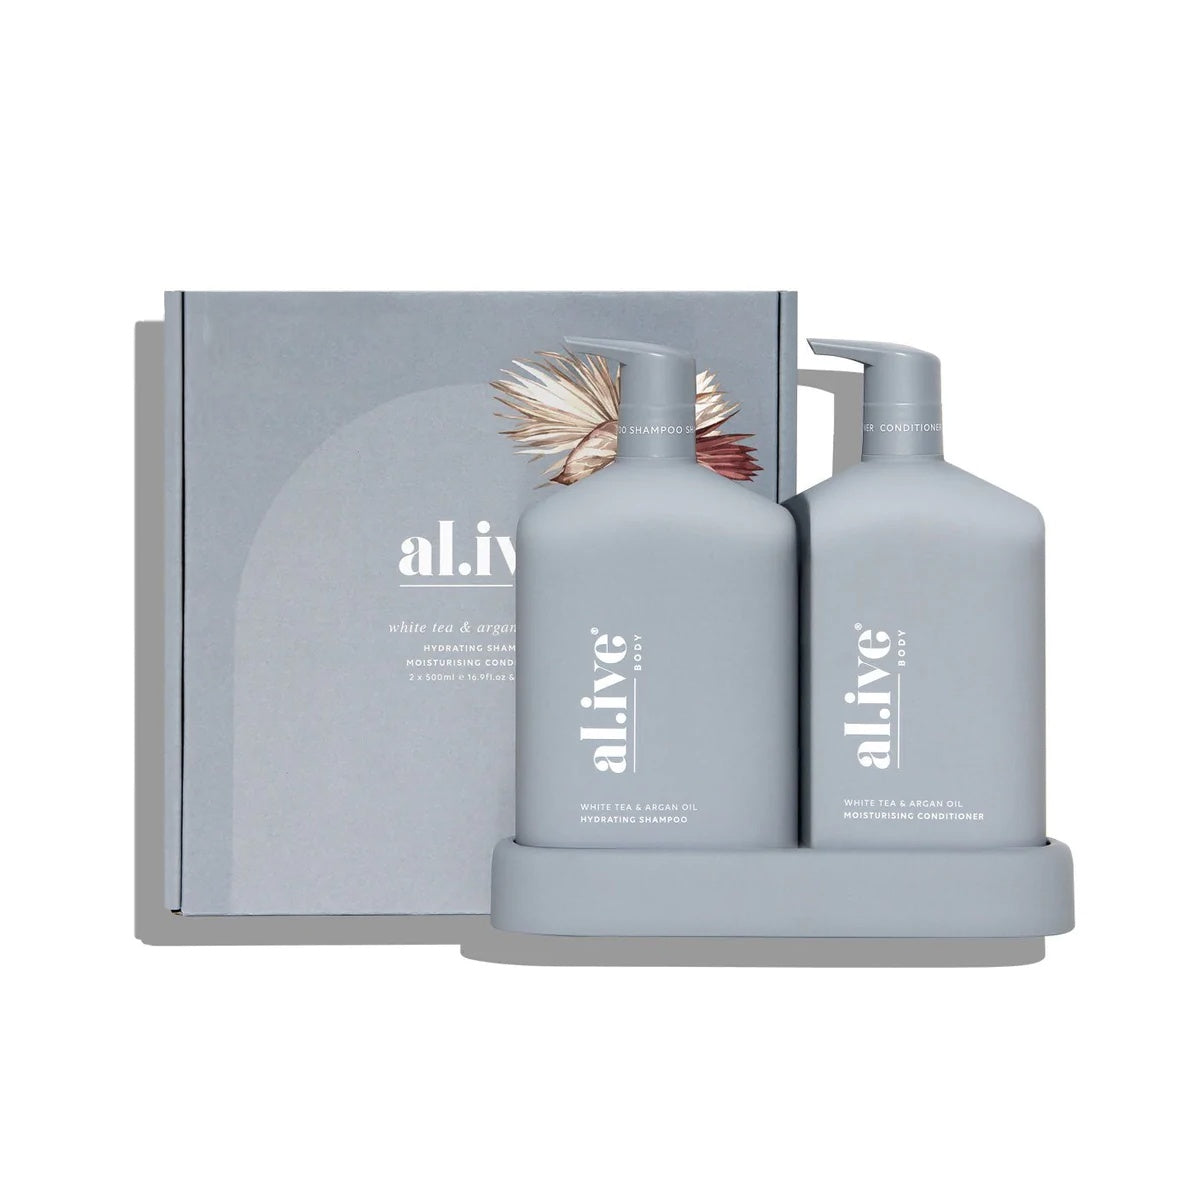 al.ive Shampoo & Conditioner Duo, White Tea & Argan Oil